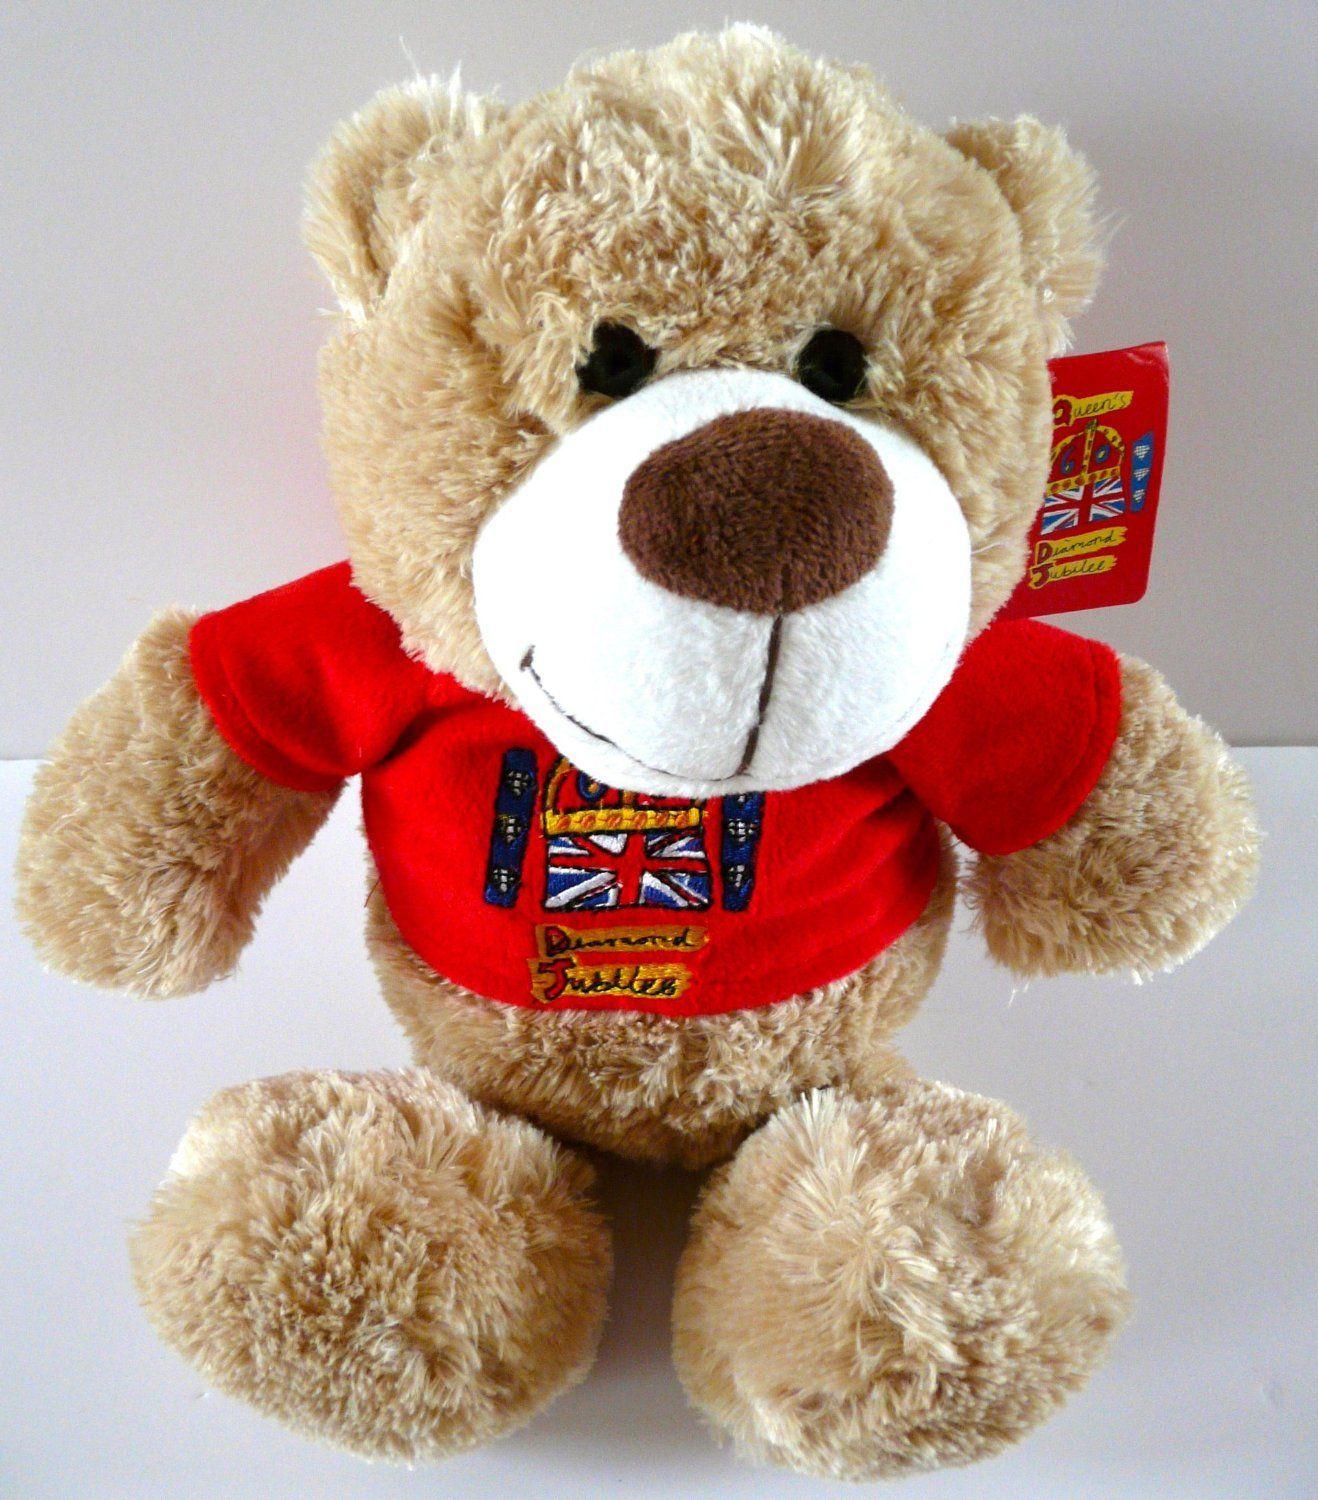 Red and Bear w Logo - Diamond Jubilee 2012 Teddy Bear With Logo Jumper 15cm Tall | eBay